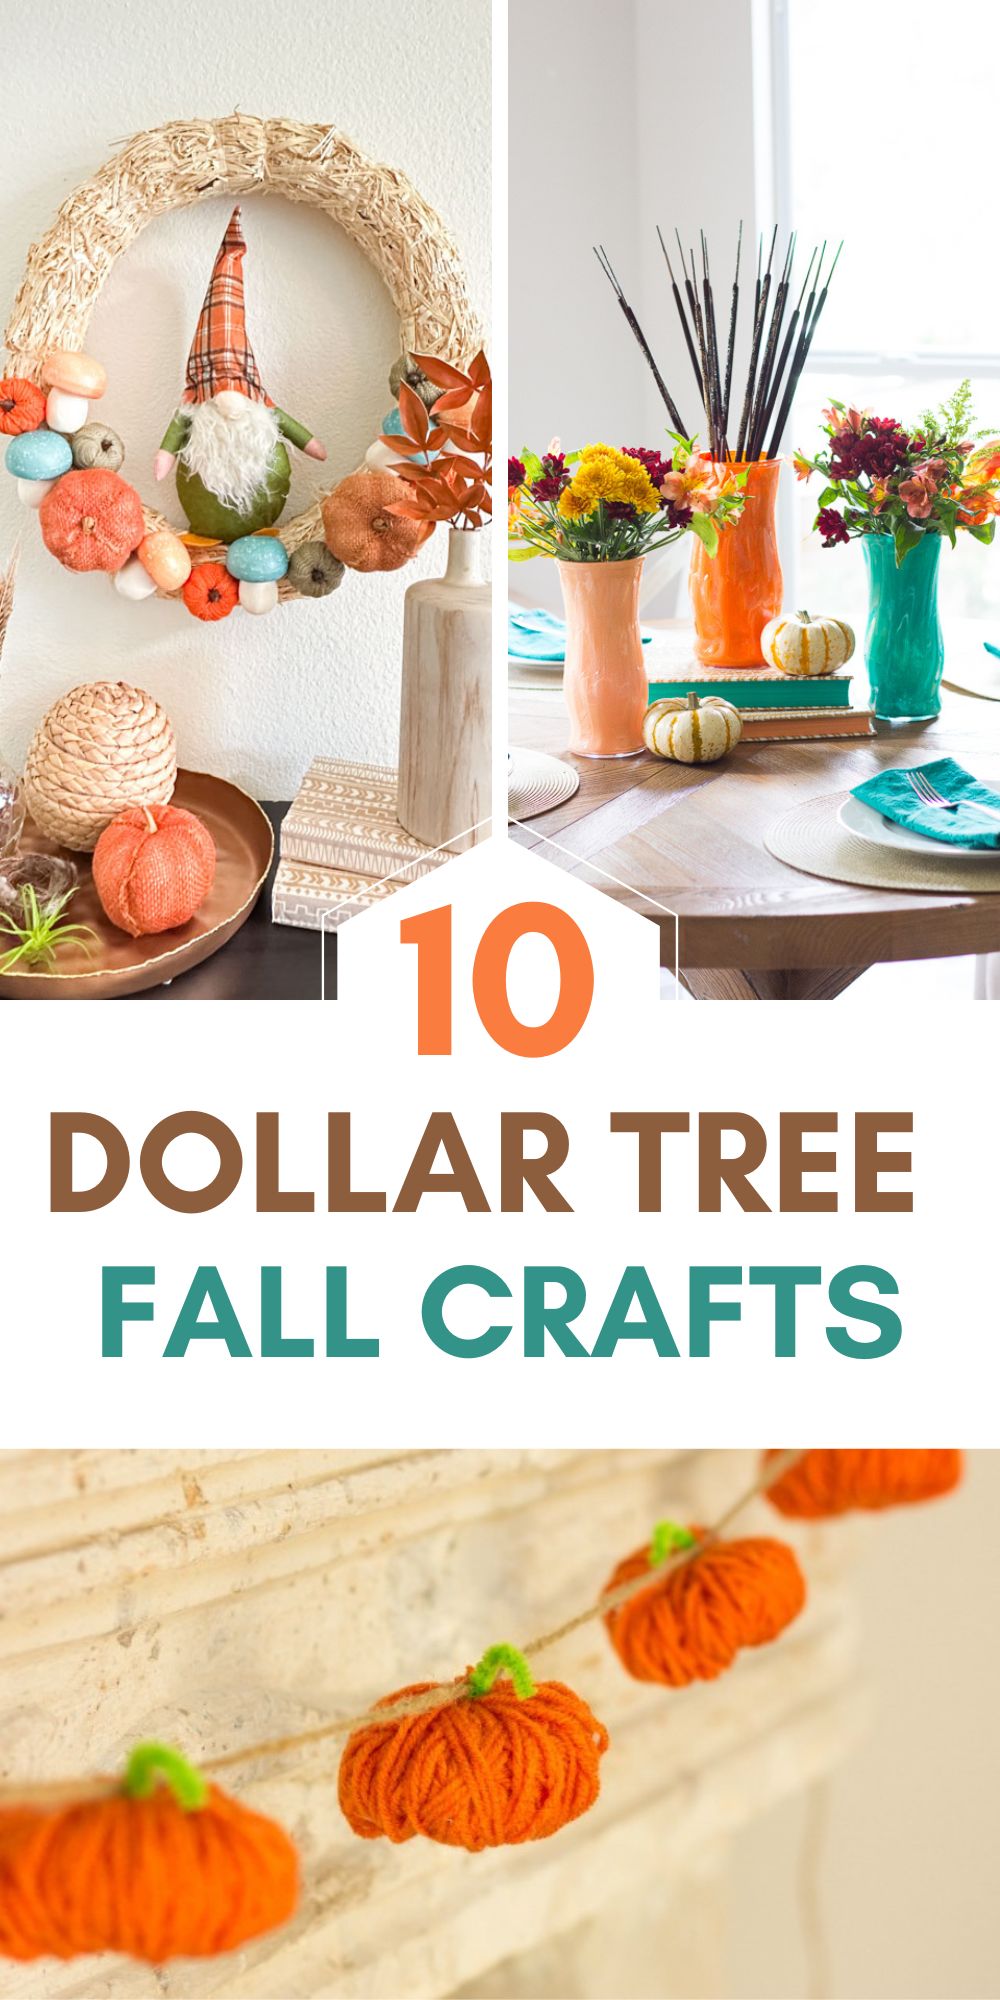 Top 10 Dollar Tree Fall Crafts